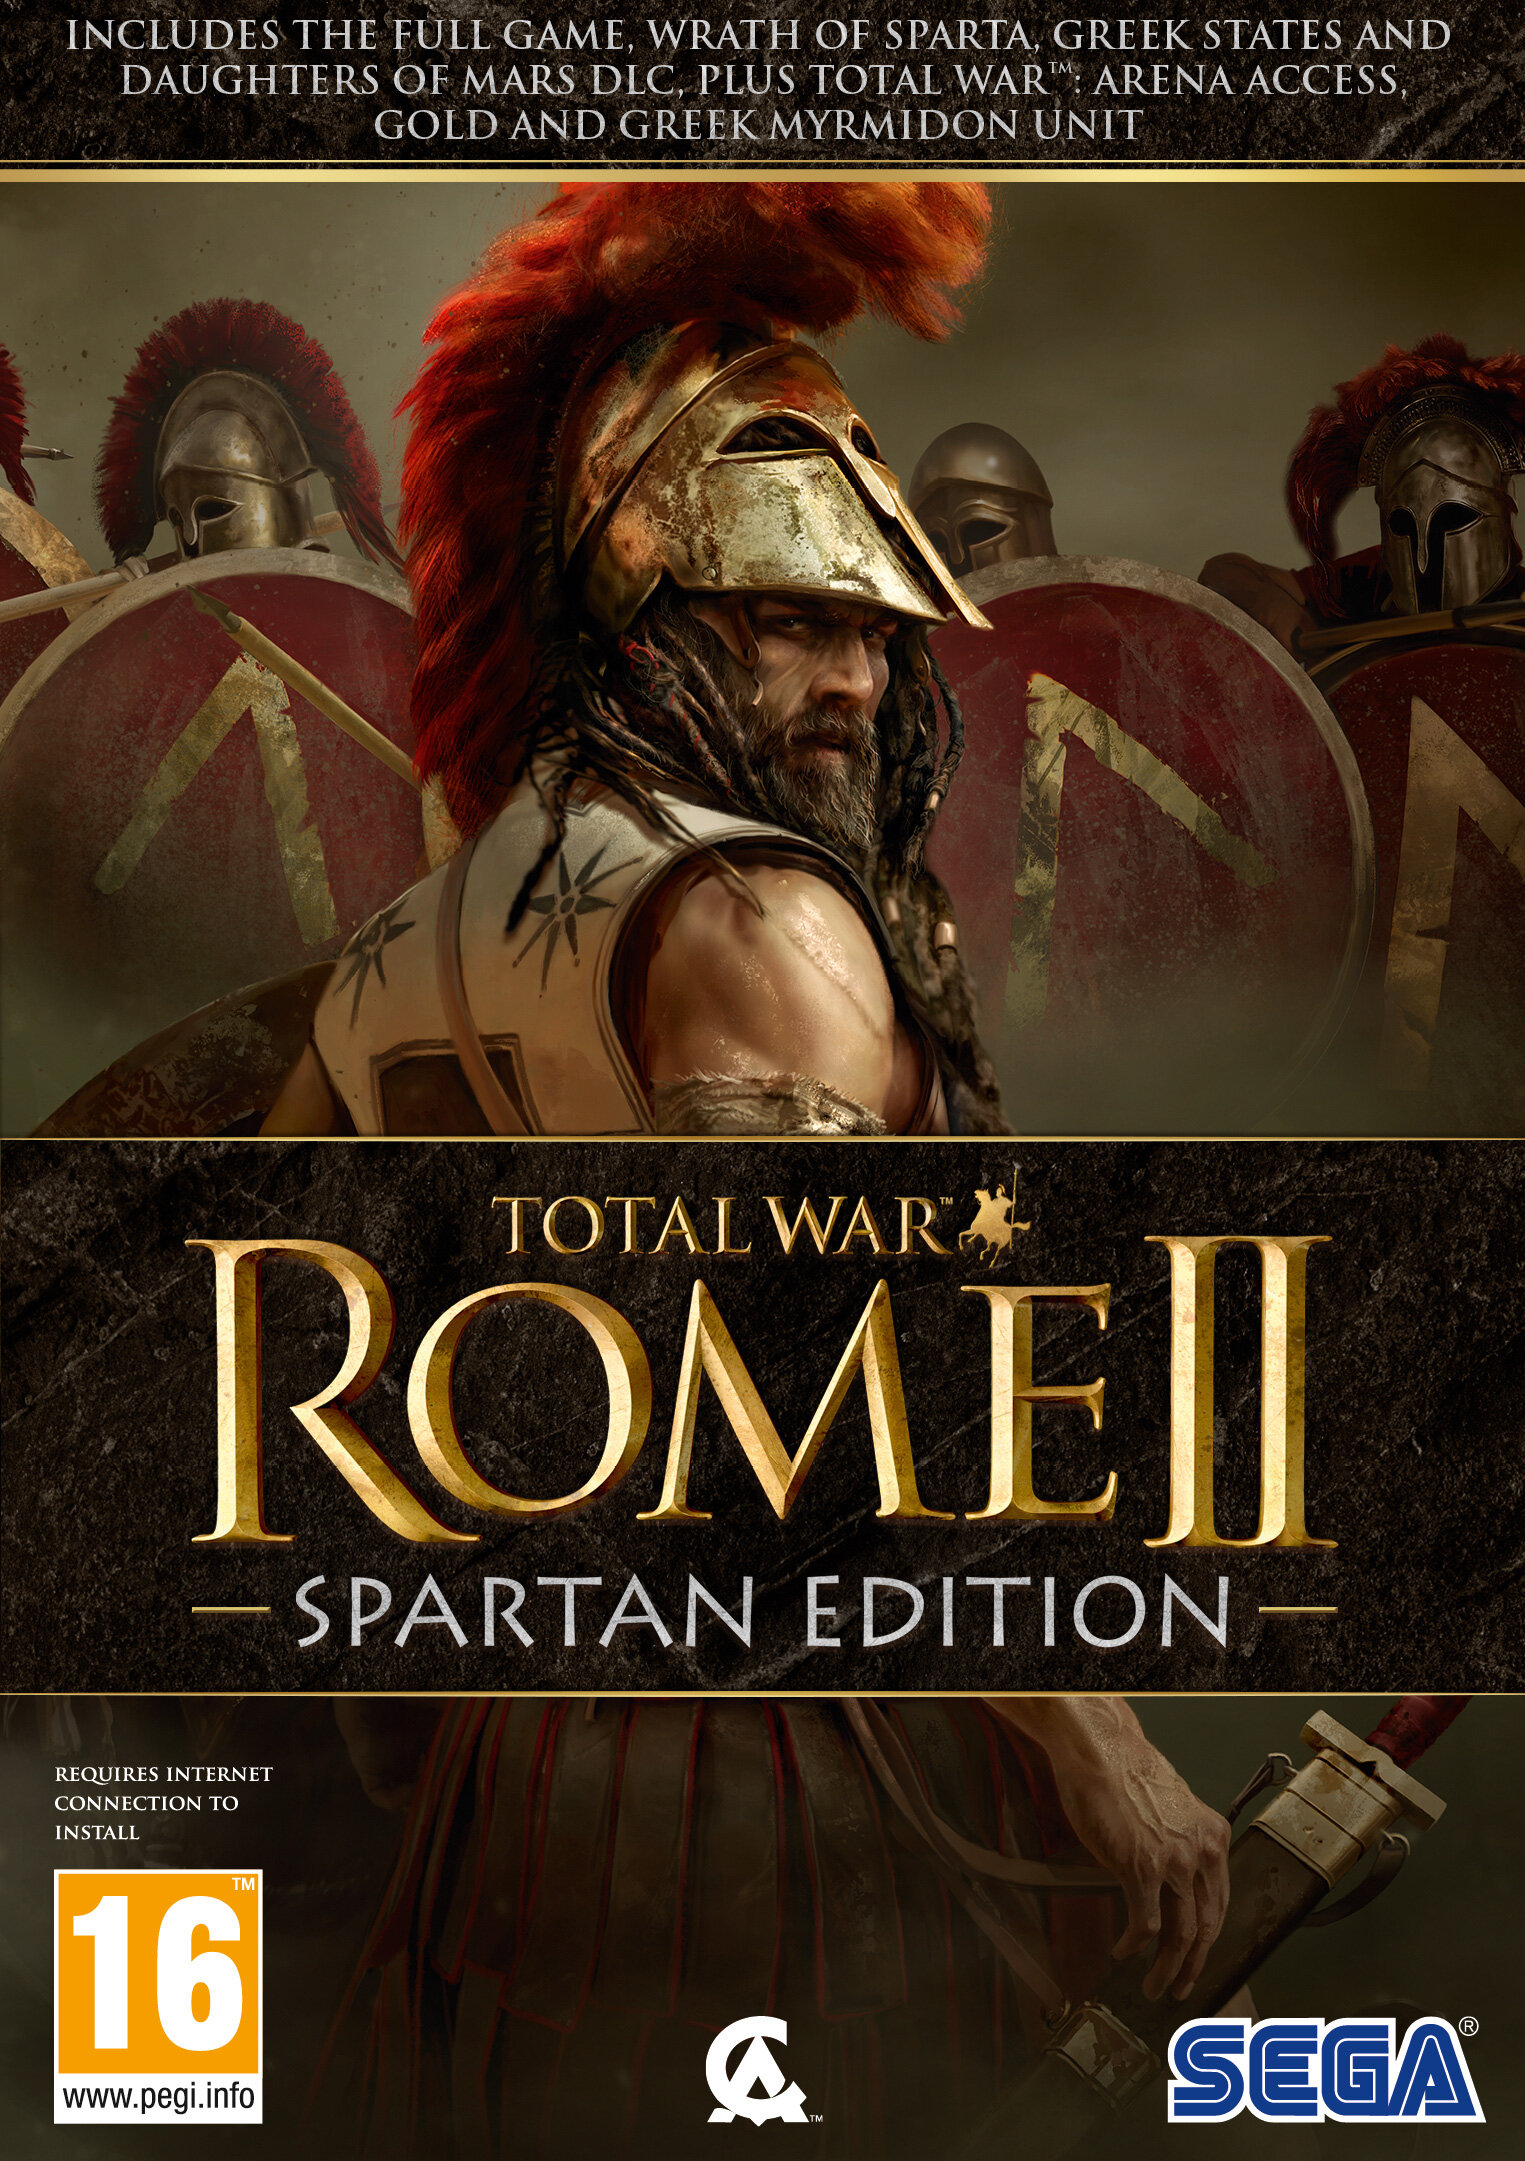 Игра Total War: ROME II Spartan Edition для PC активация Steam электронный ключ